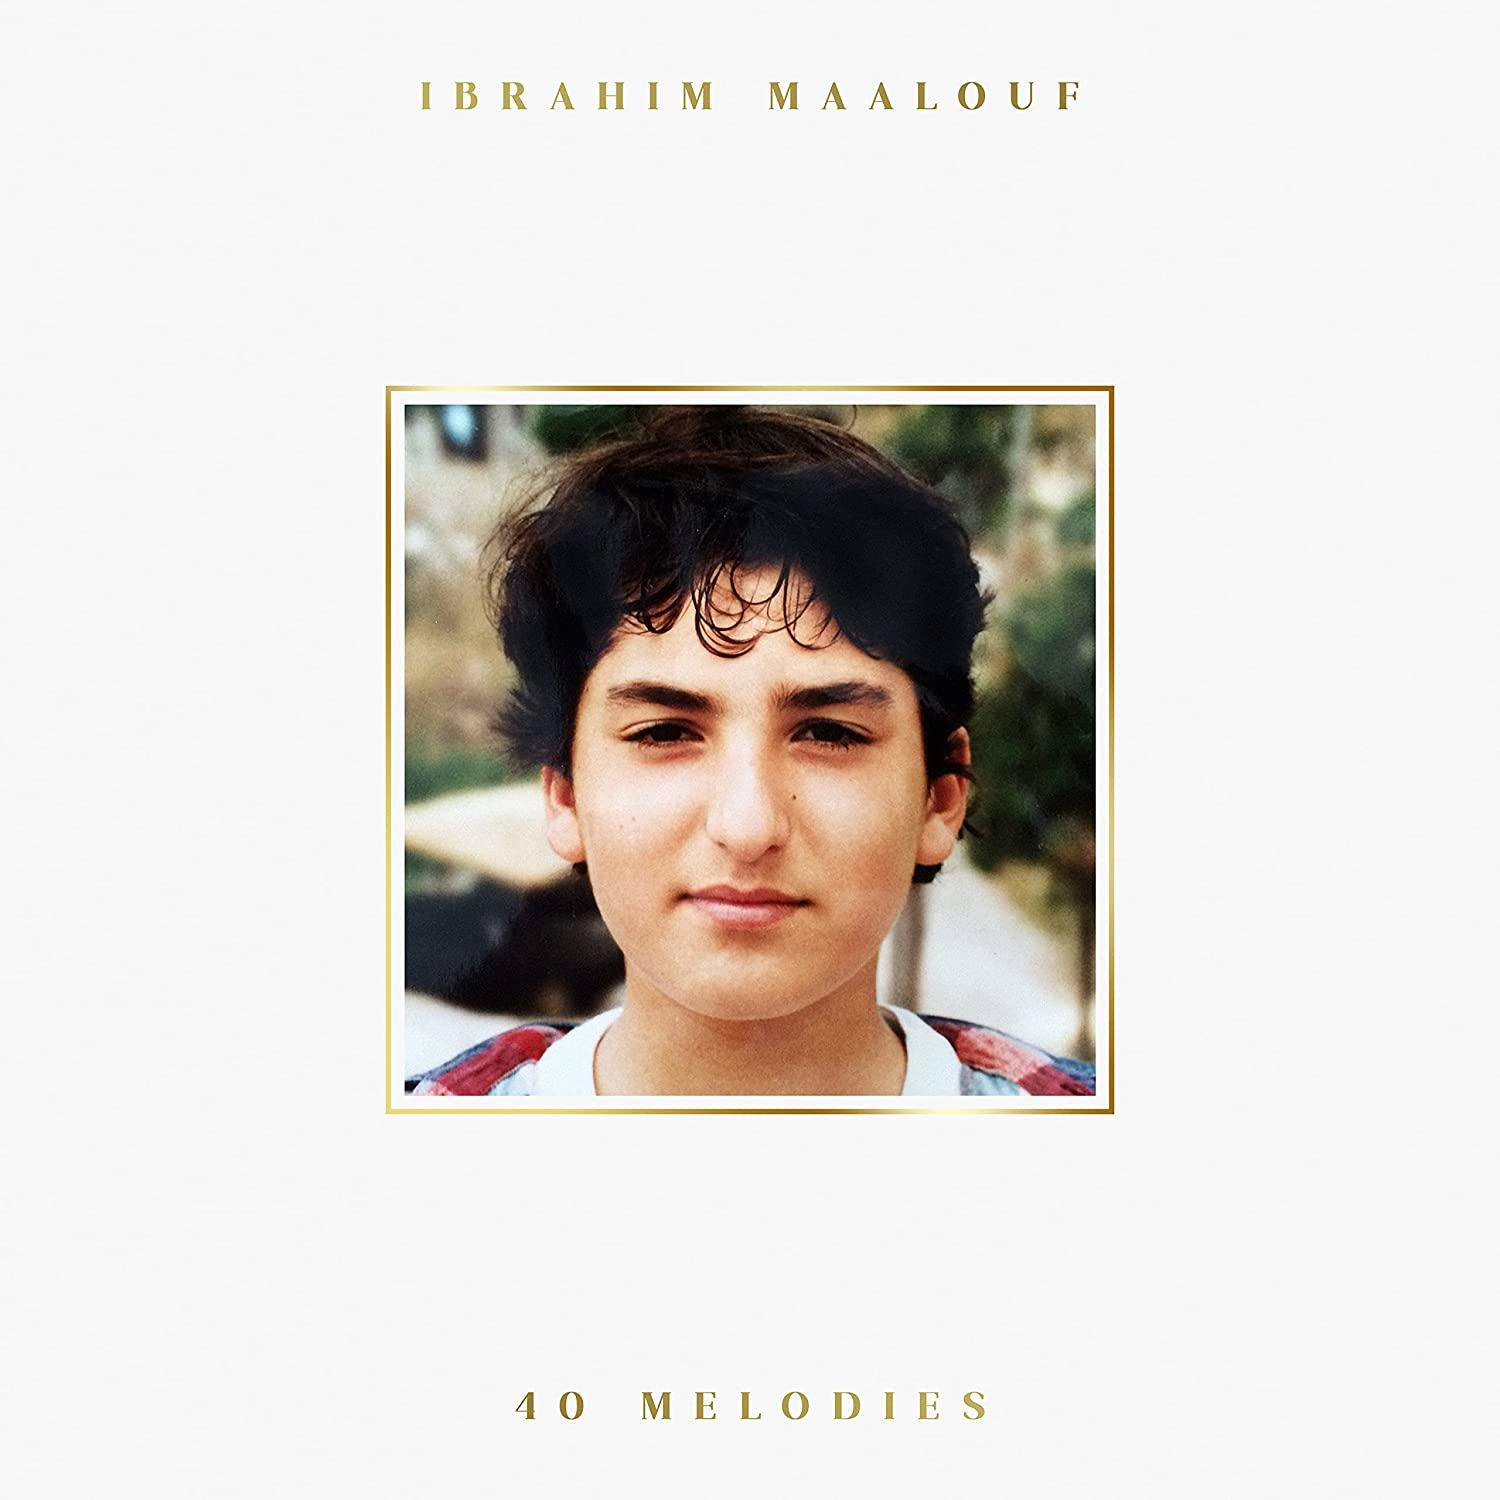 Melodies Ibrahim Maalouf - - (Vinyl) 40